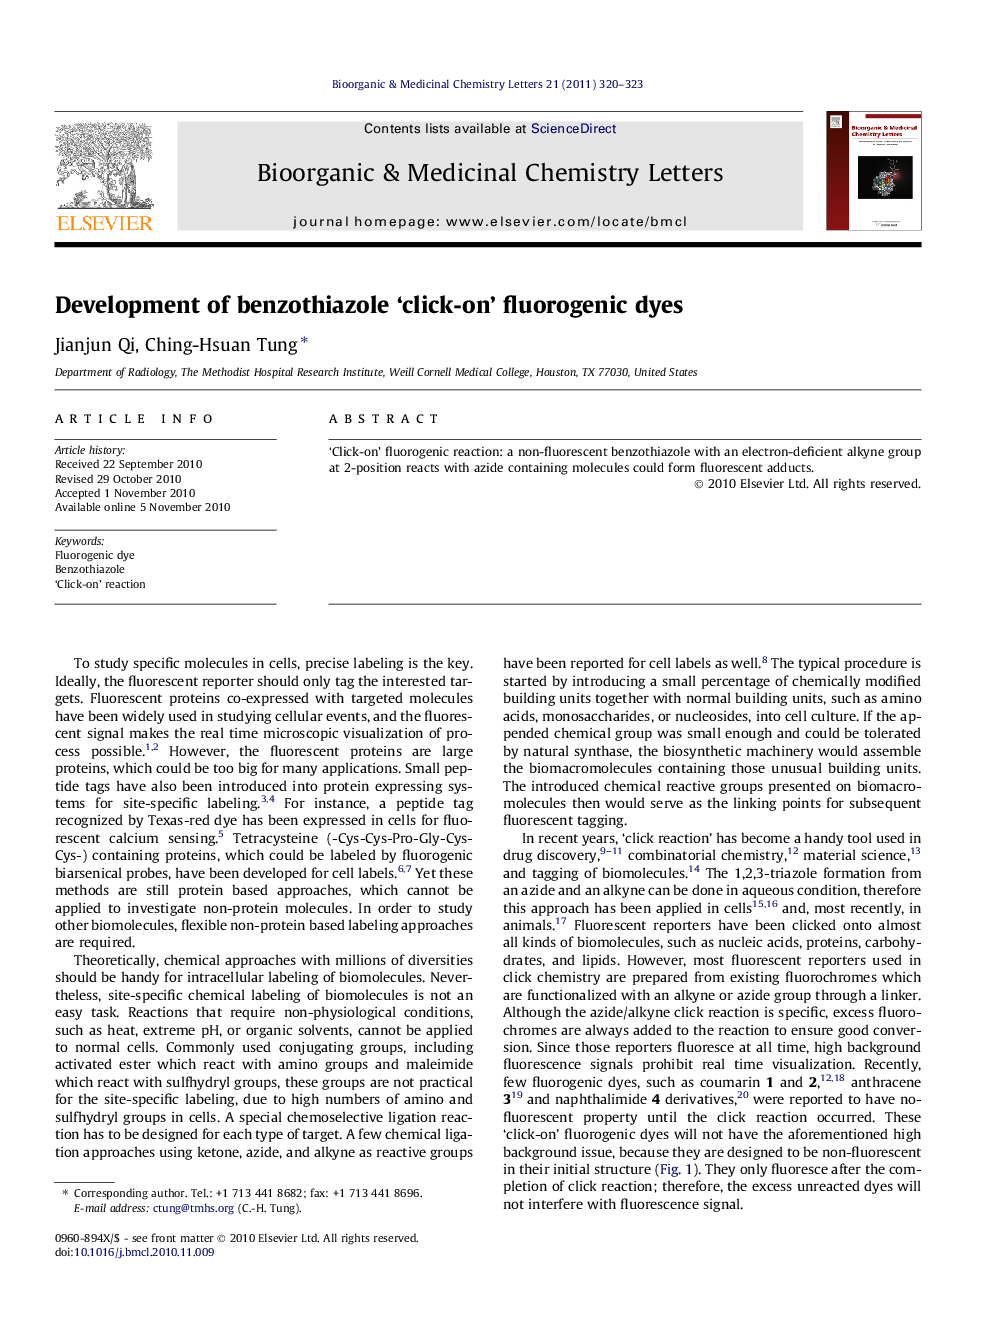 Development of benzothiazole 'click-on' fluorogenic dyes